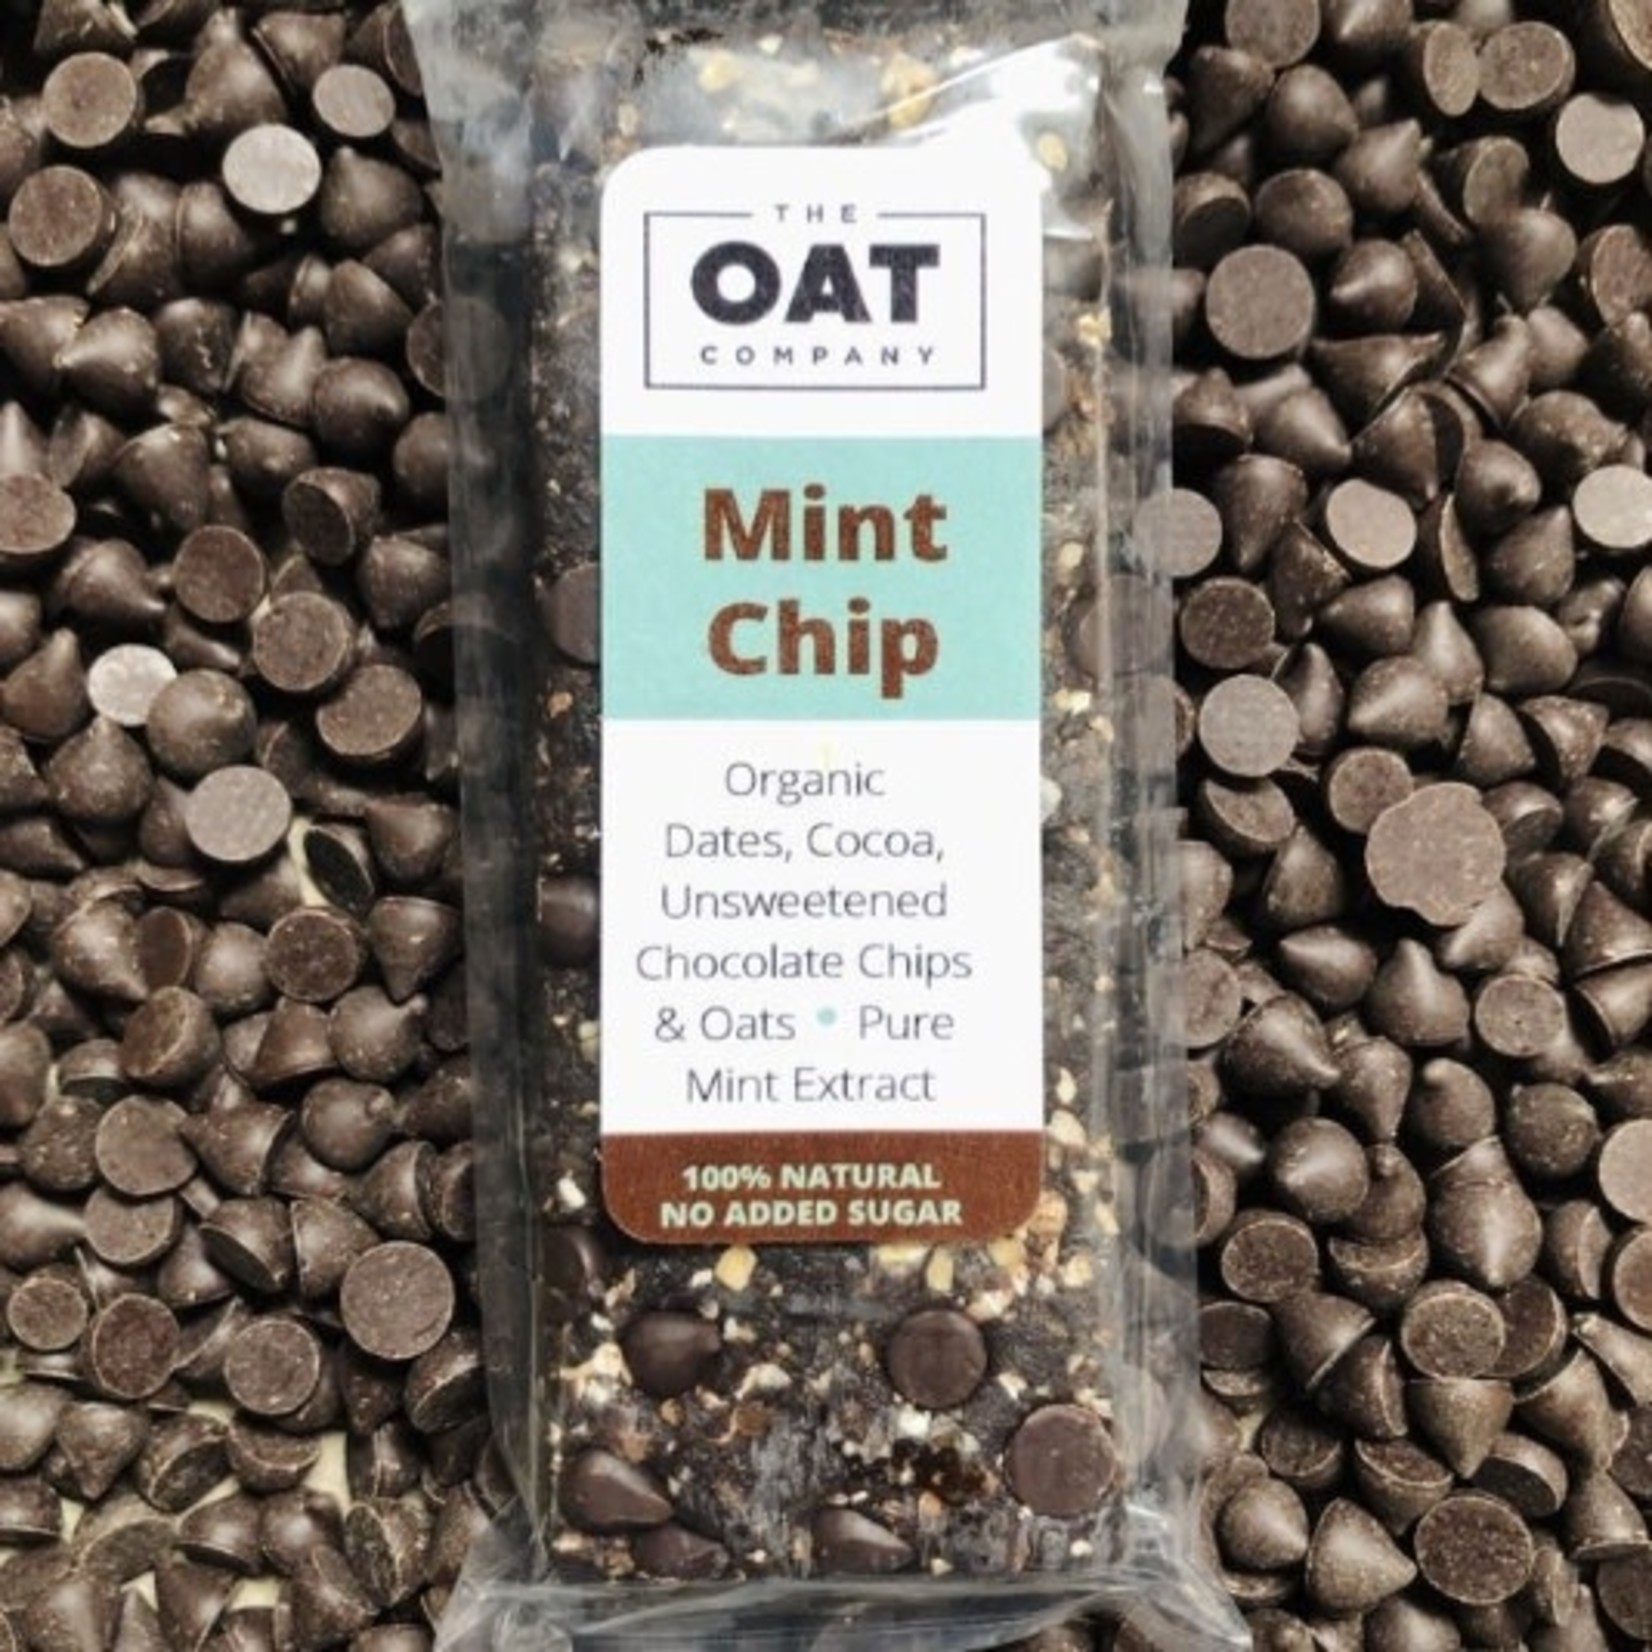 The Oat Company The Oat Company Mint Chip Bar